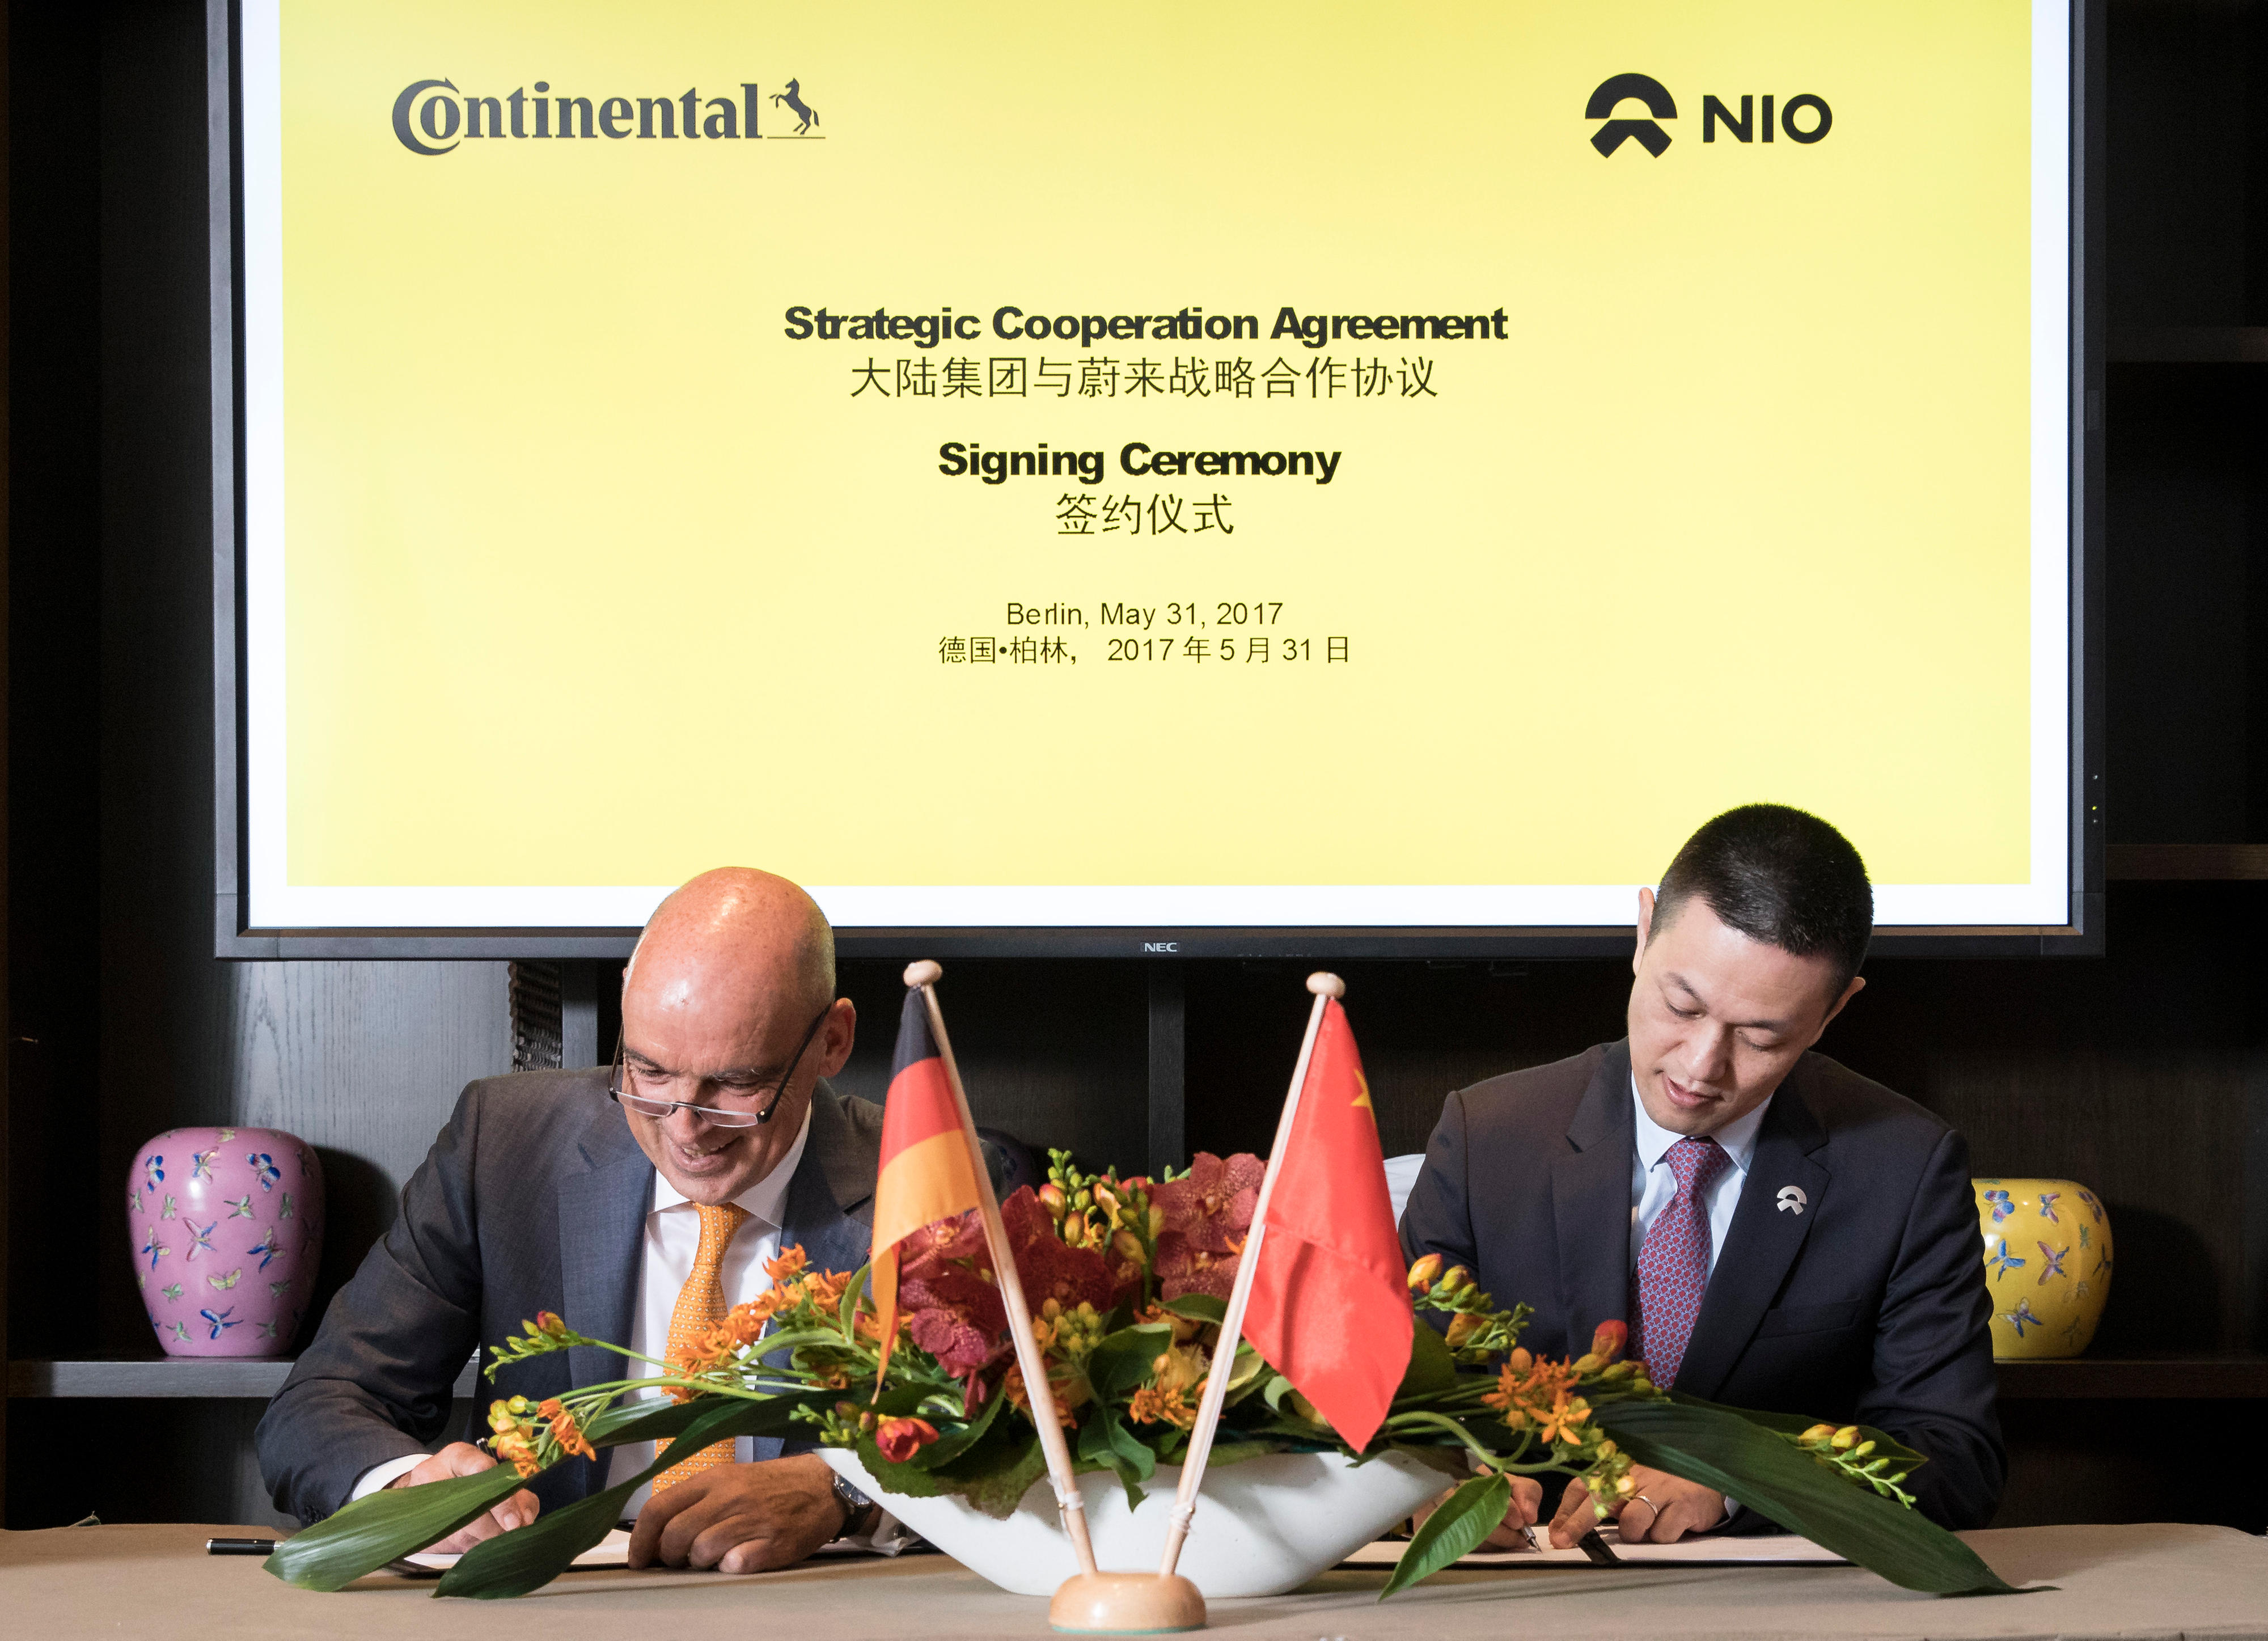 20170531 NIO - signed the agreement.jpg